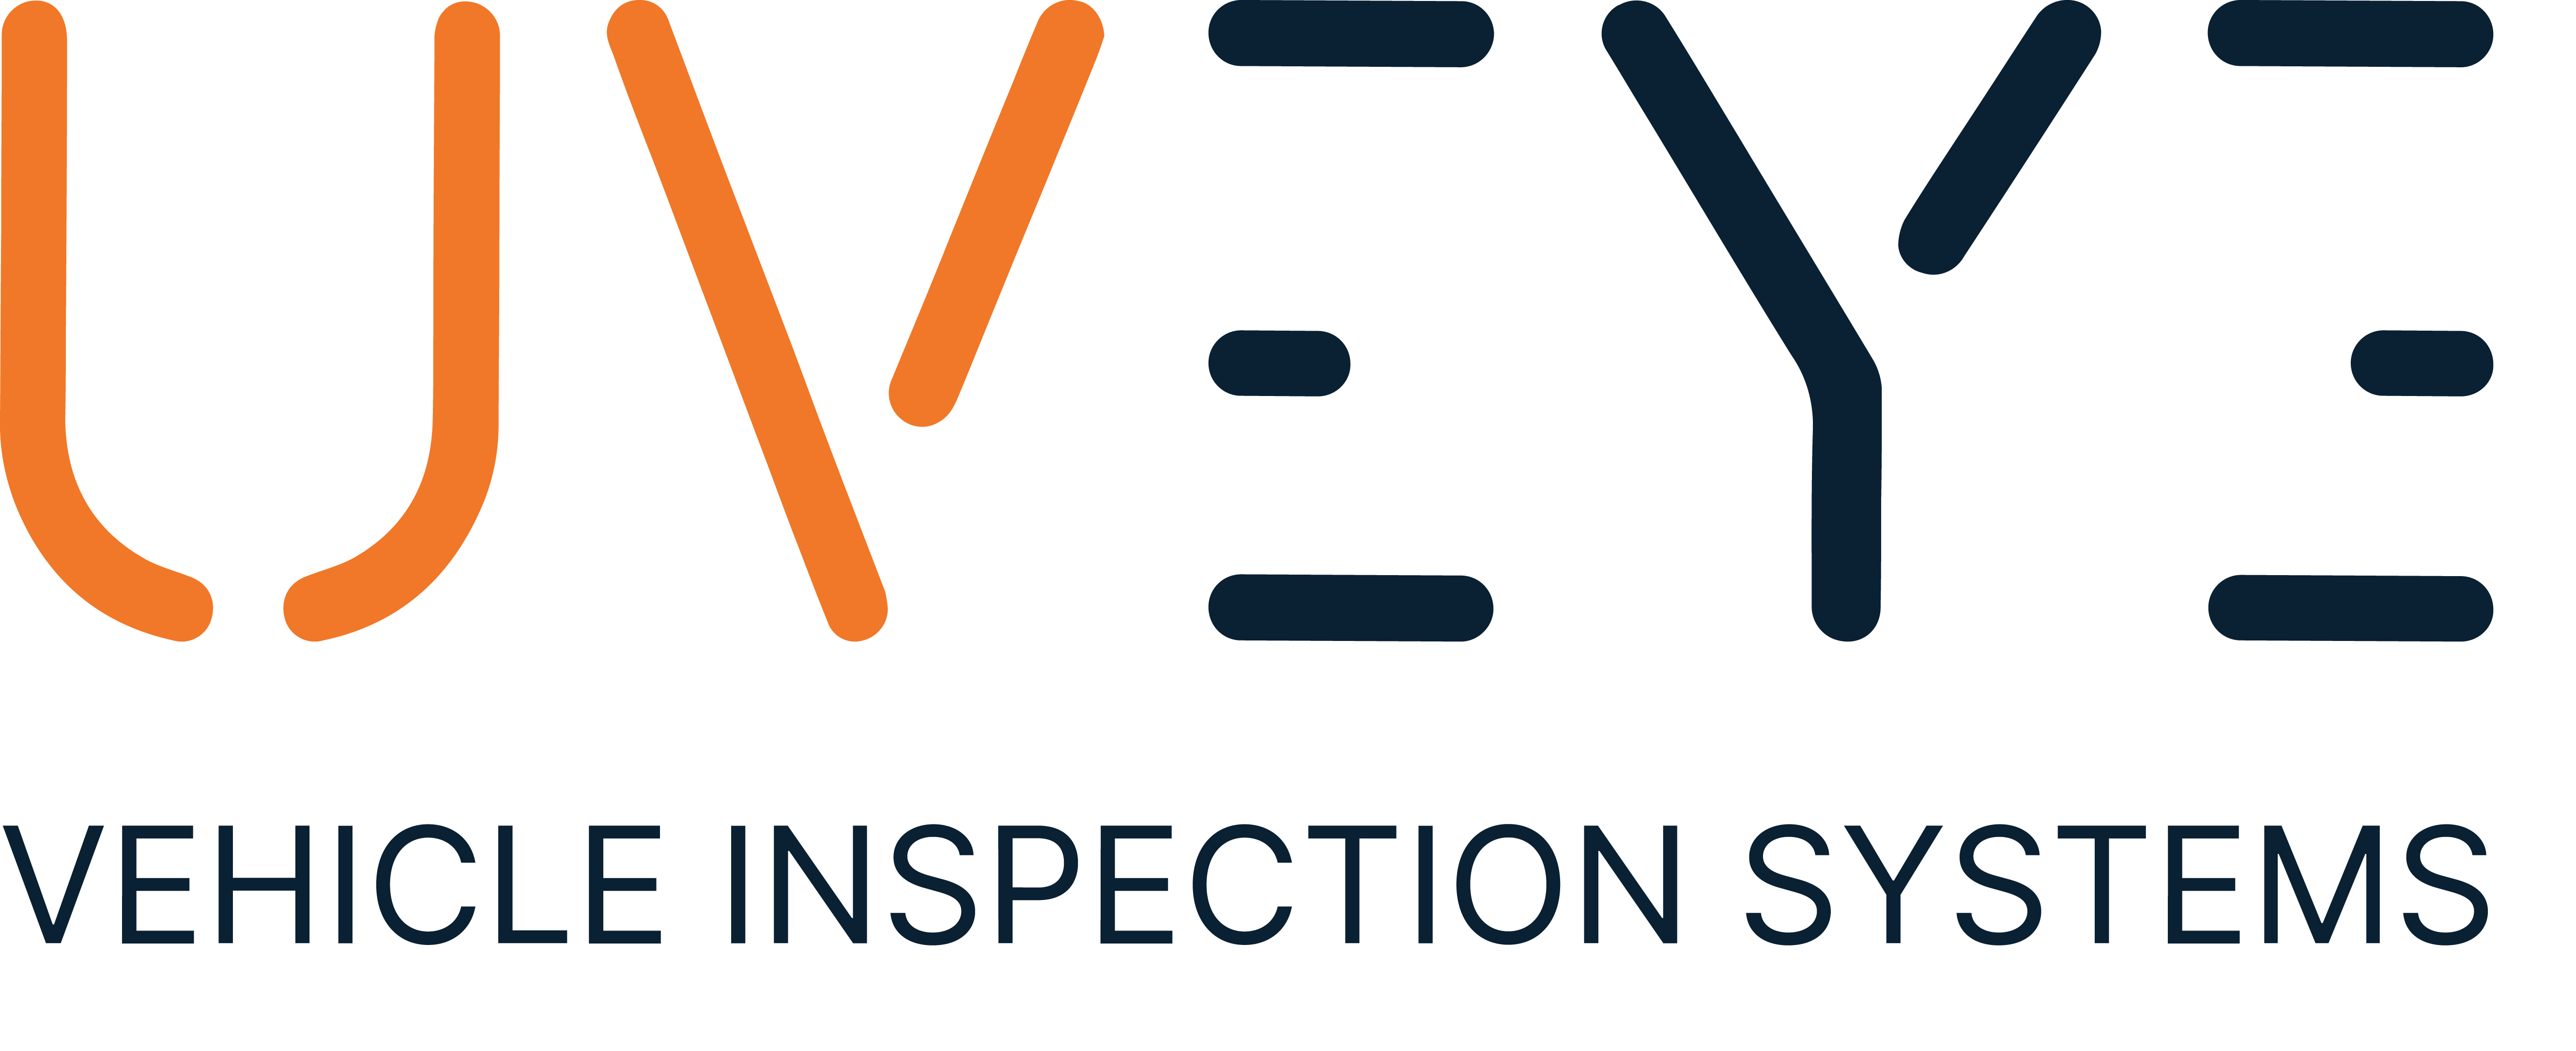 Vehicle_Inspection_Systems_(Orange+Blue) (5)